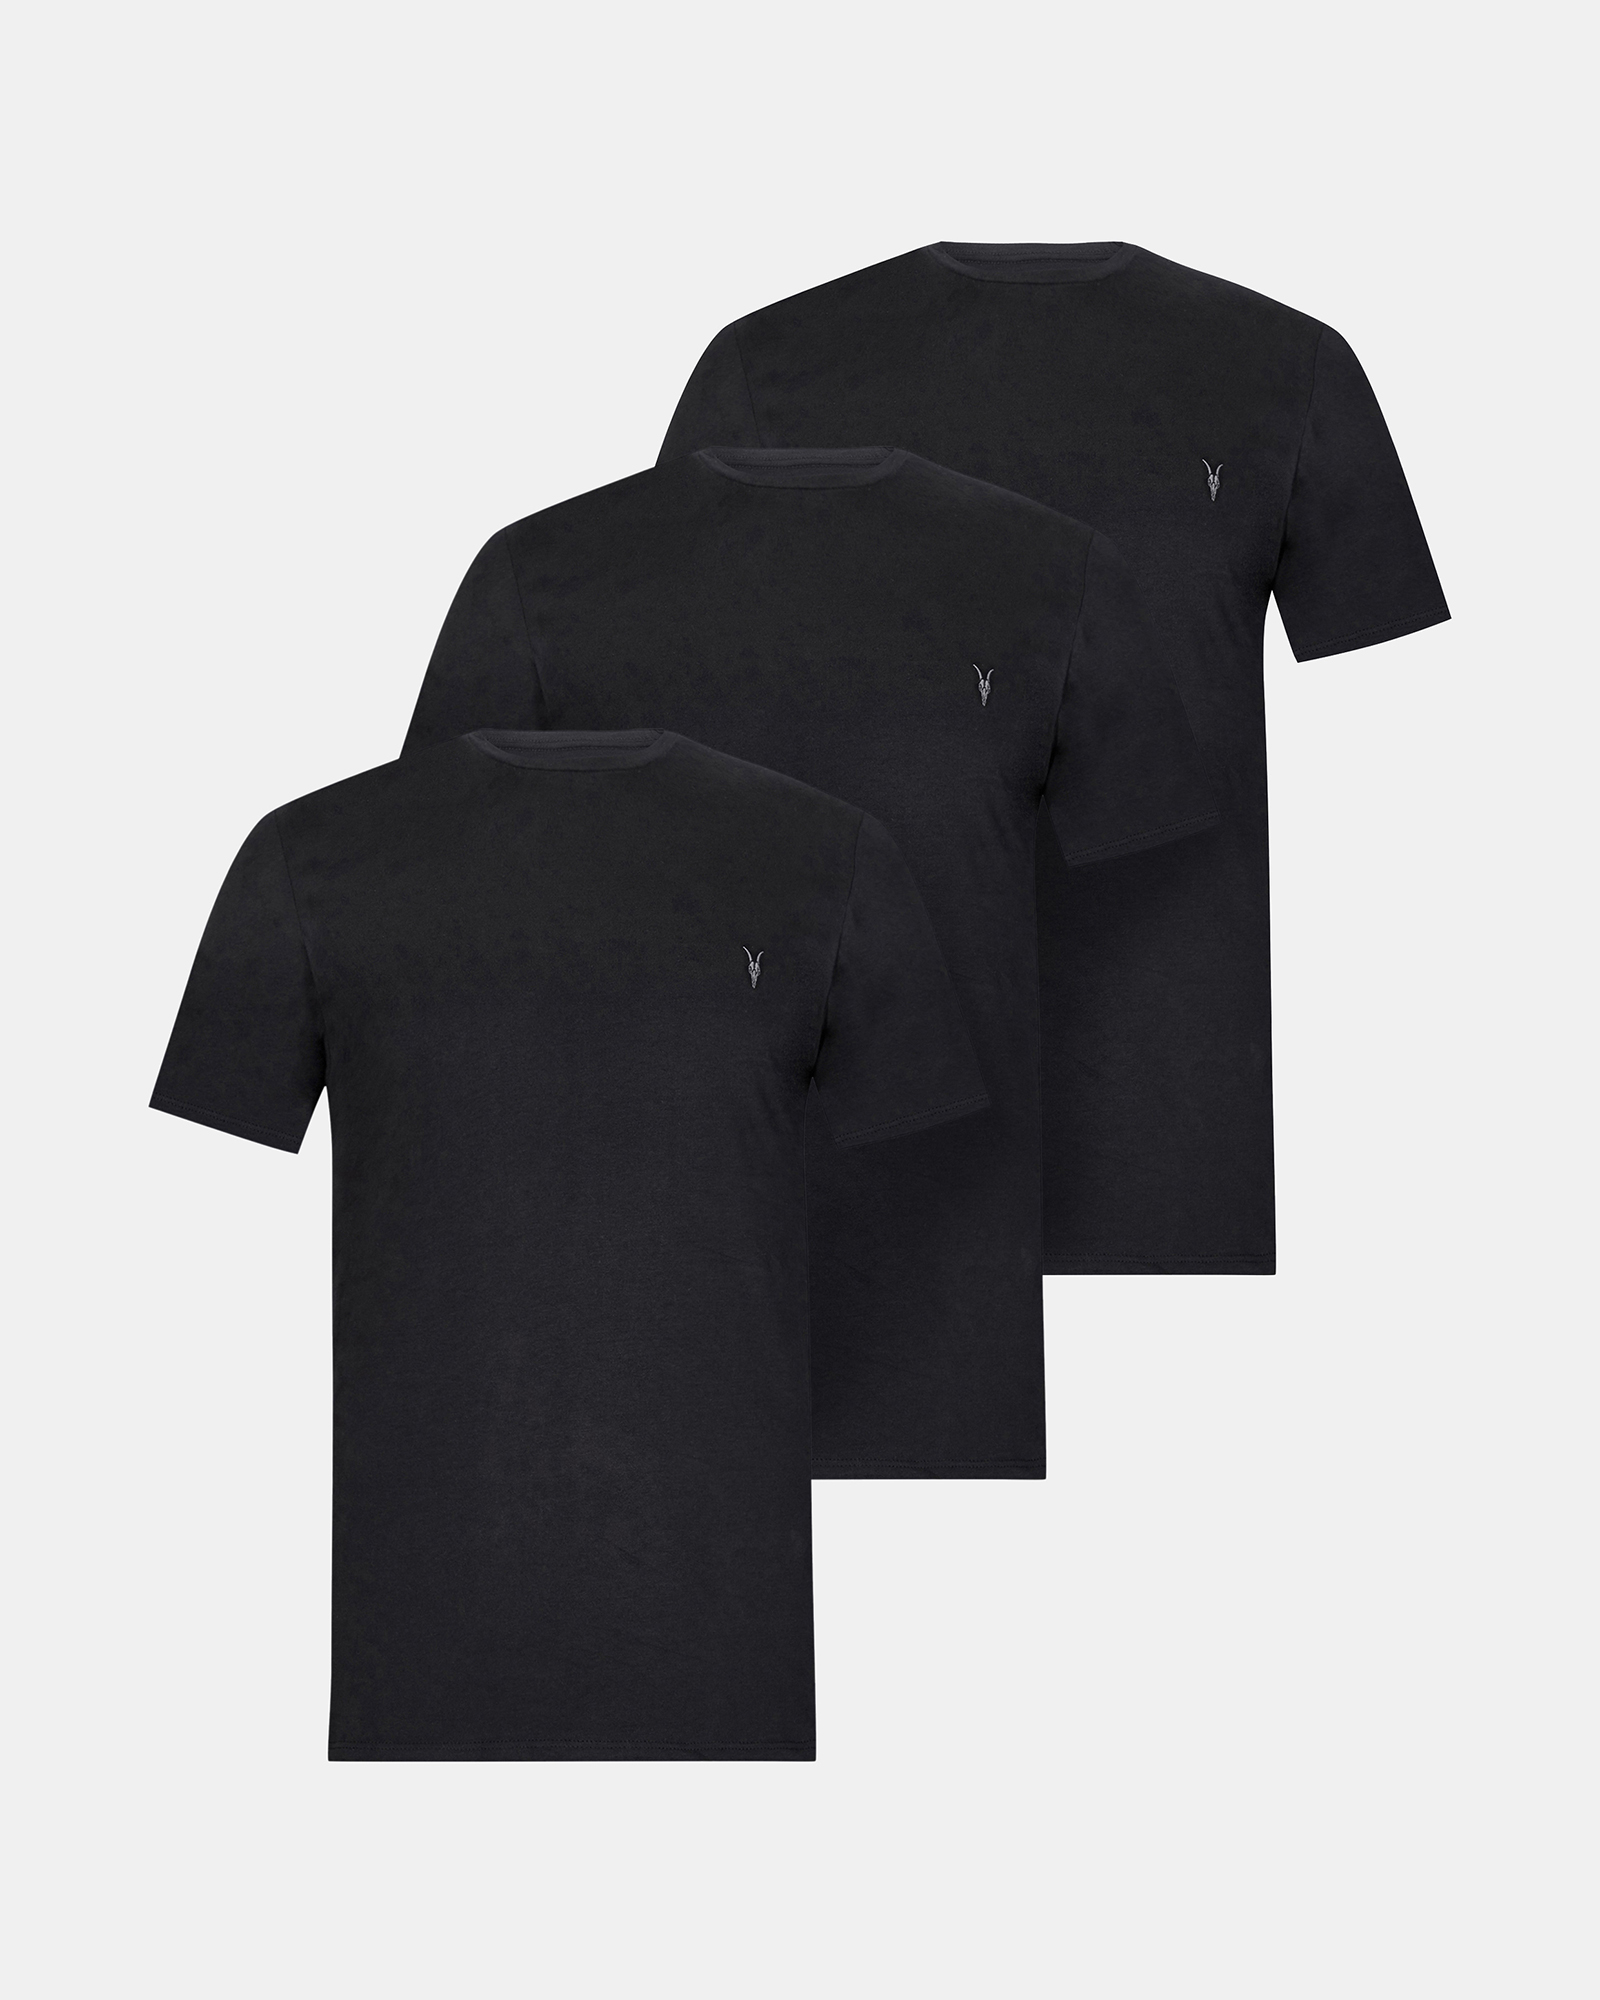 AllSaints Brace Brushed Cotton 3 Pack T-Shirts,, Black